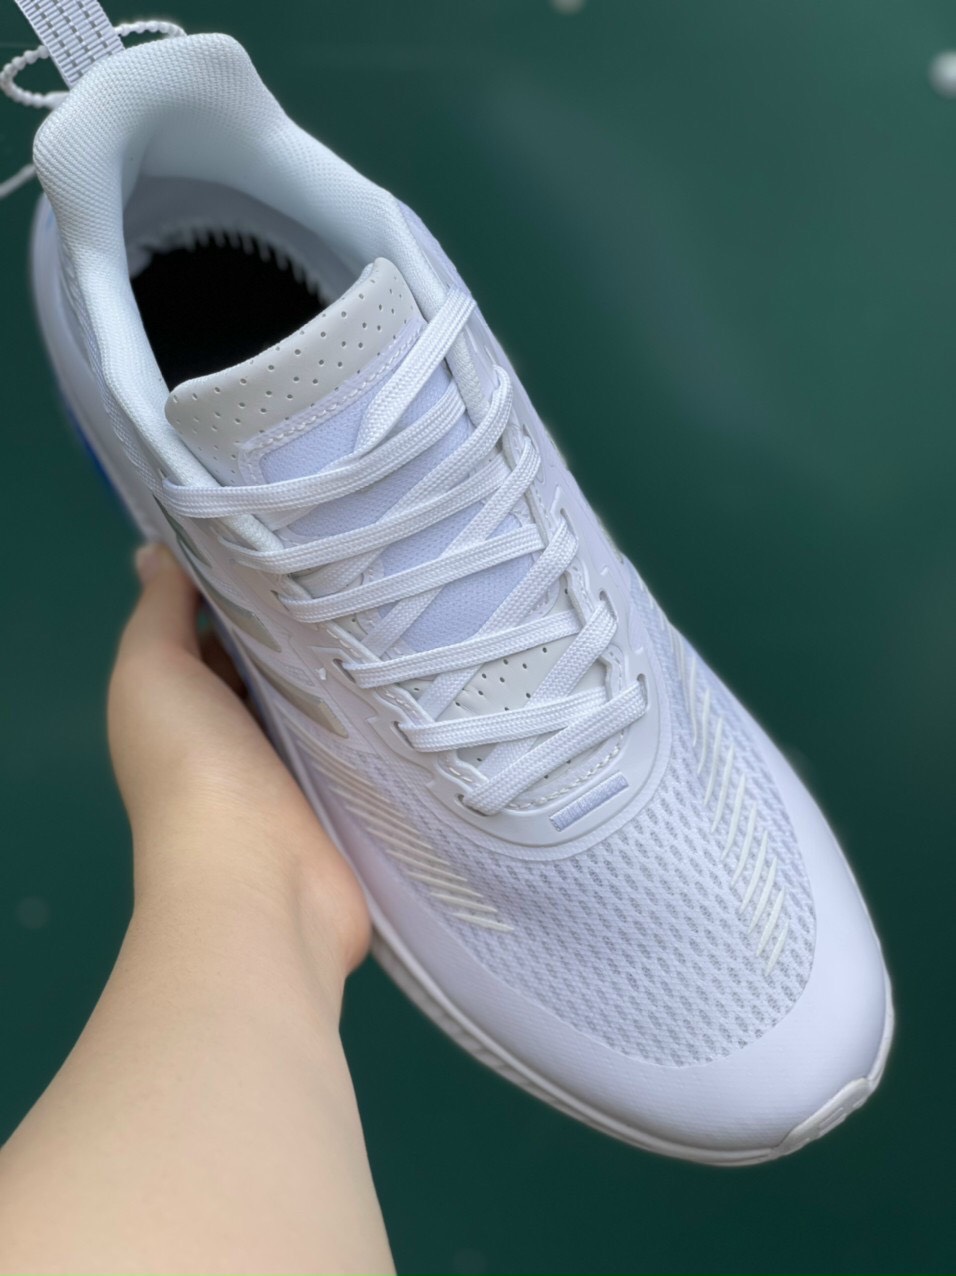 Giày Adidas Alphabounce 2022 Trắng Đế Xanh Rep 1:1